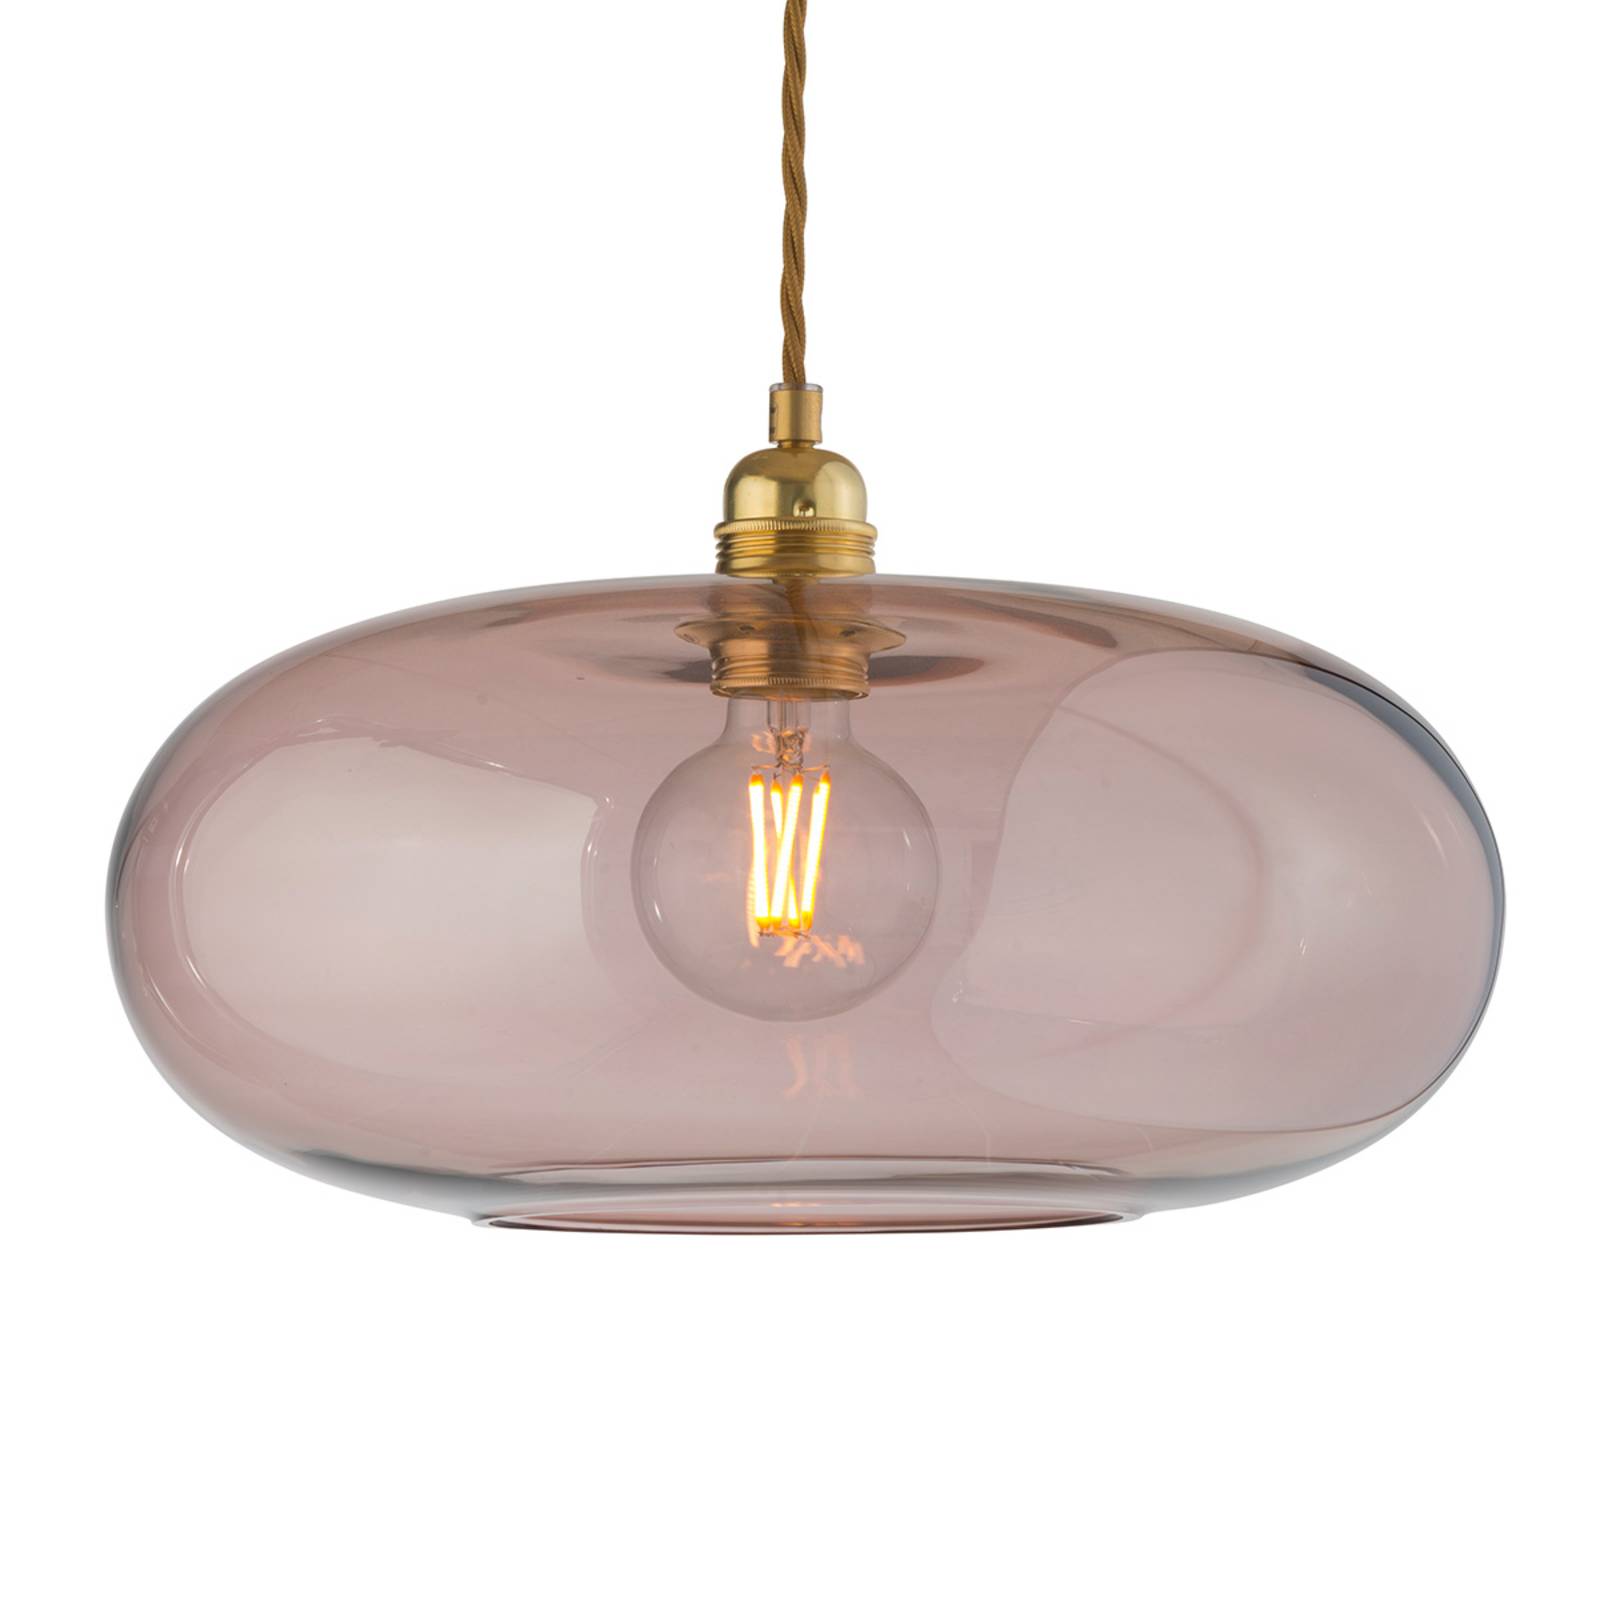 EBB & FLOW Horizon hanglamp rosé-bruin Ø 36 cm